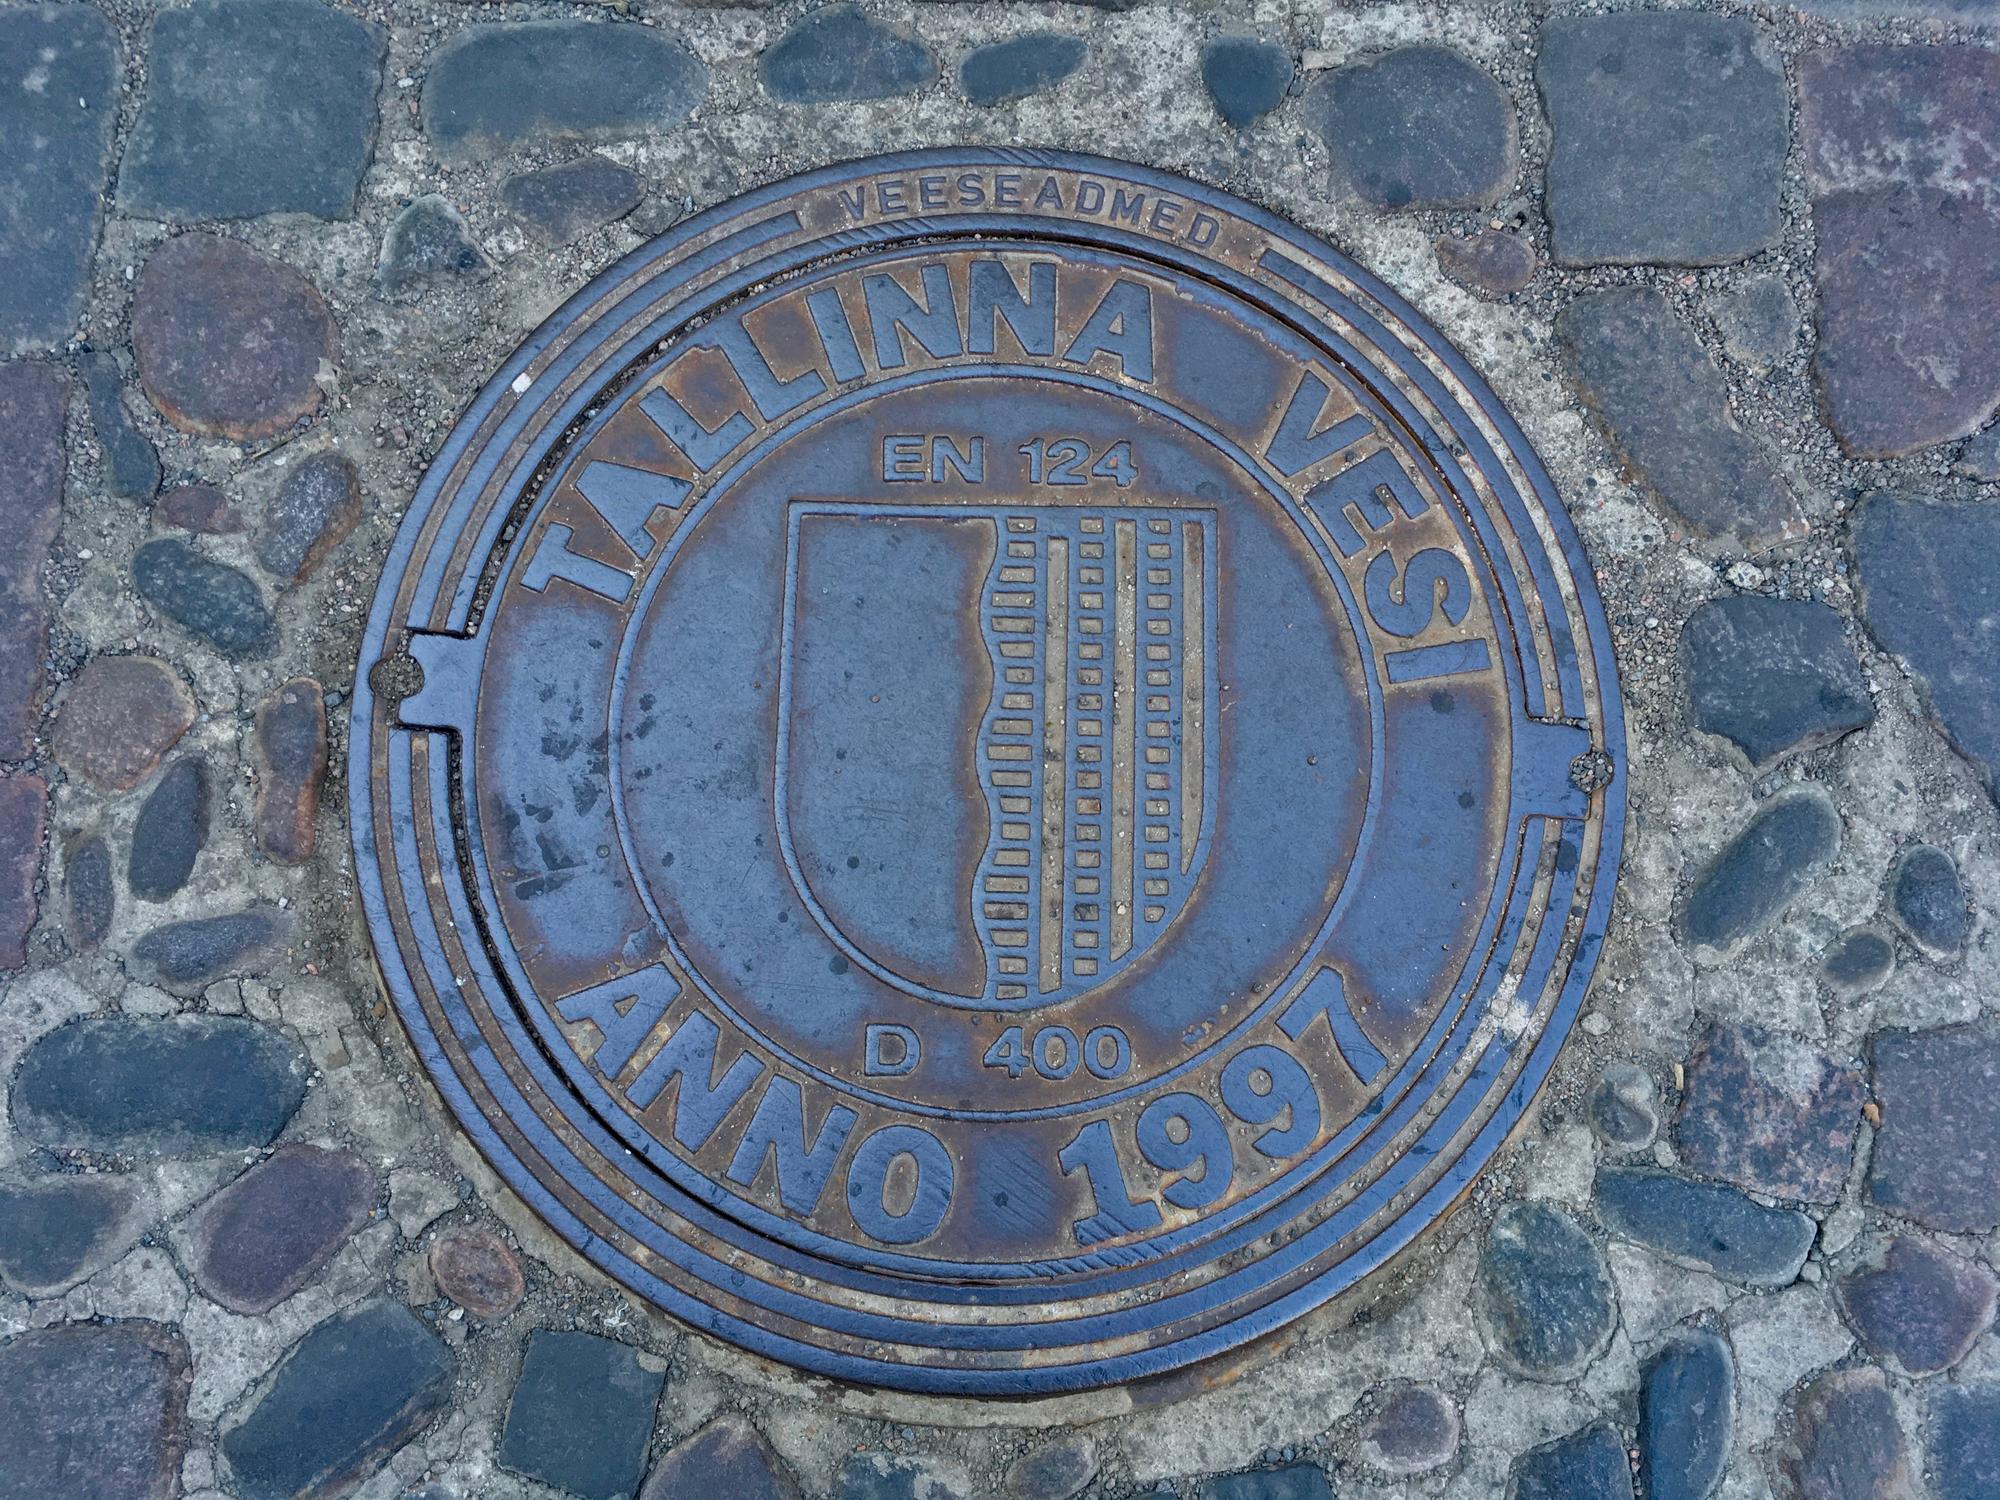 🇪🇪 Tallinn, Estonia, May 2018.